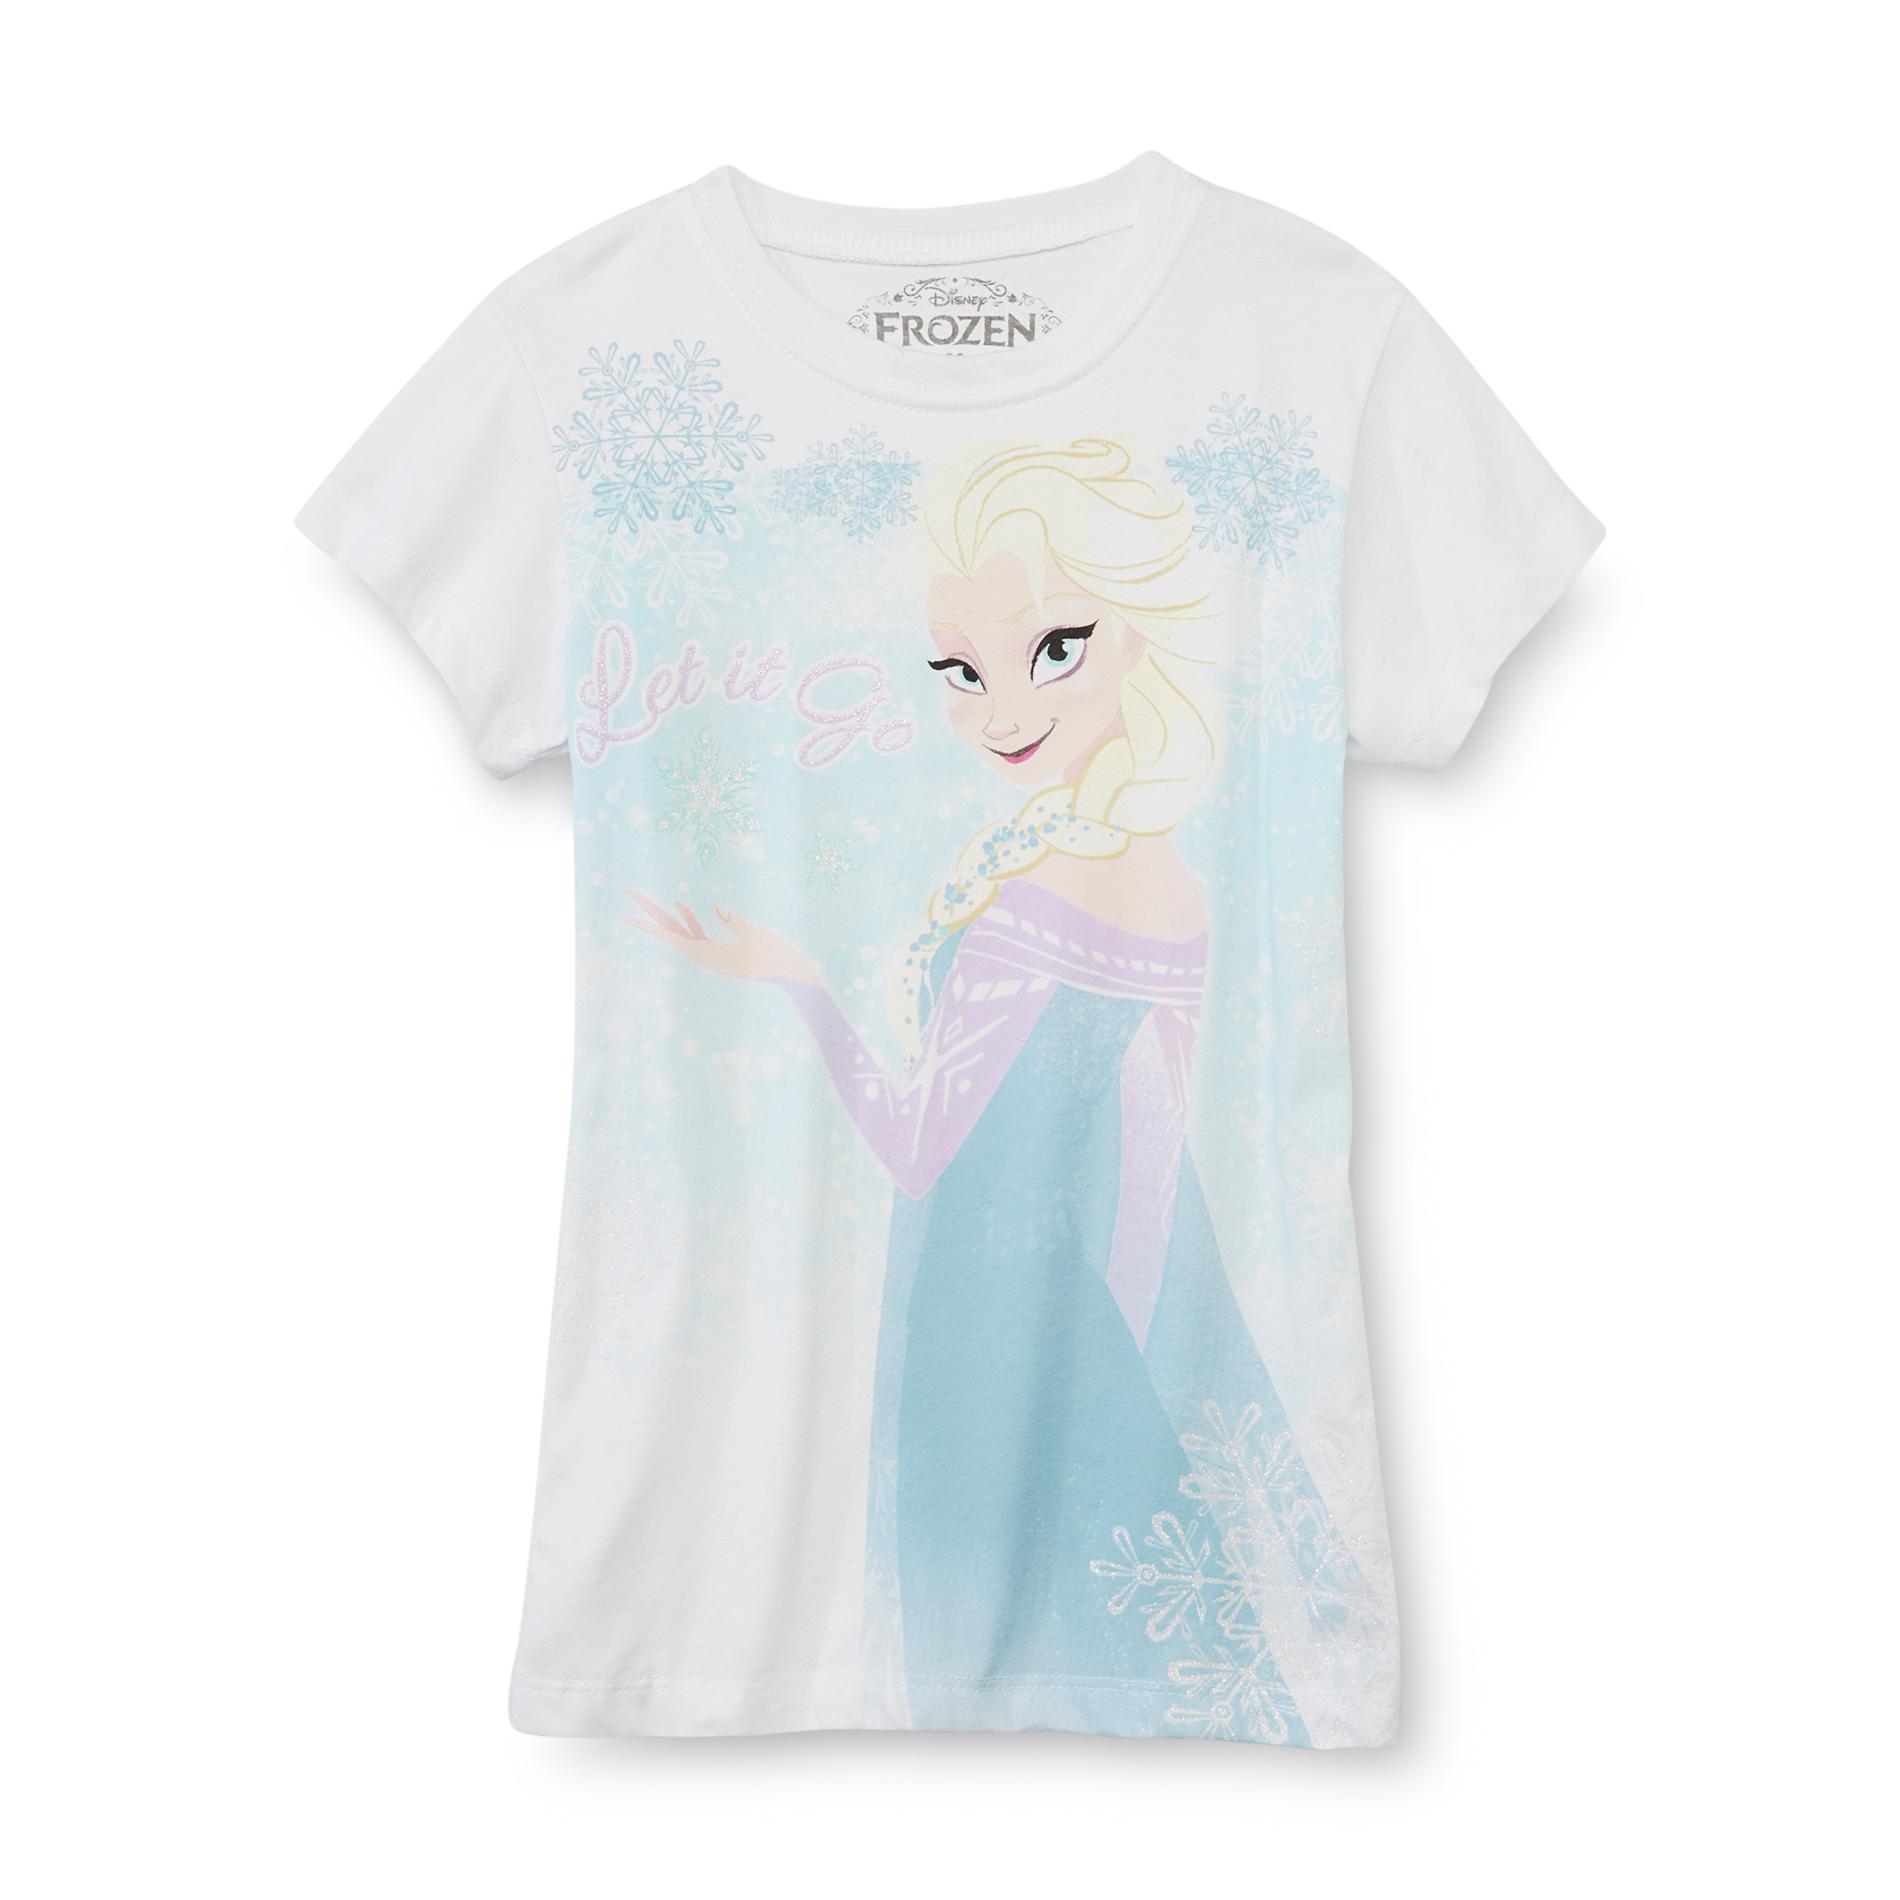 Disney Frozen Girl's Graphic T-Shirt - Princess Elsa